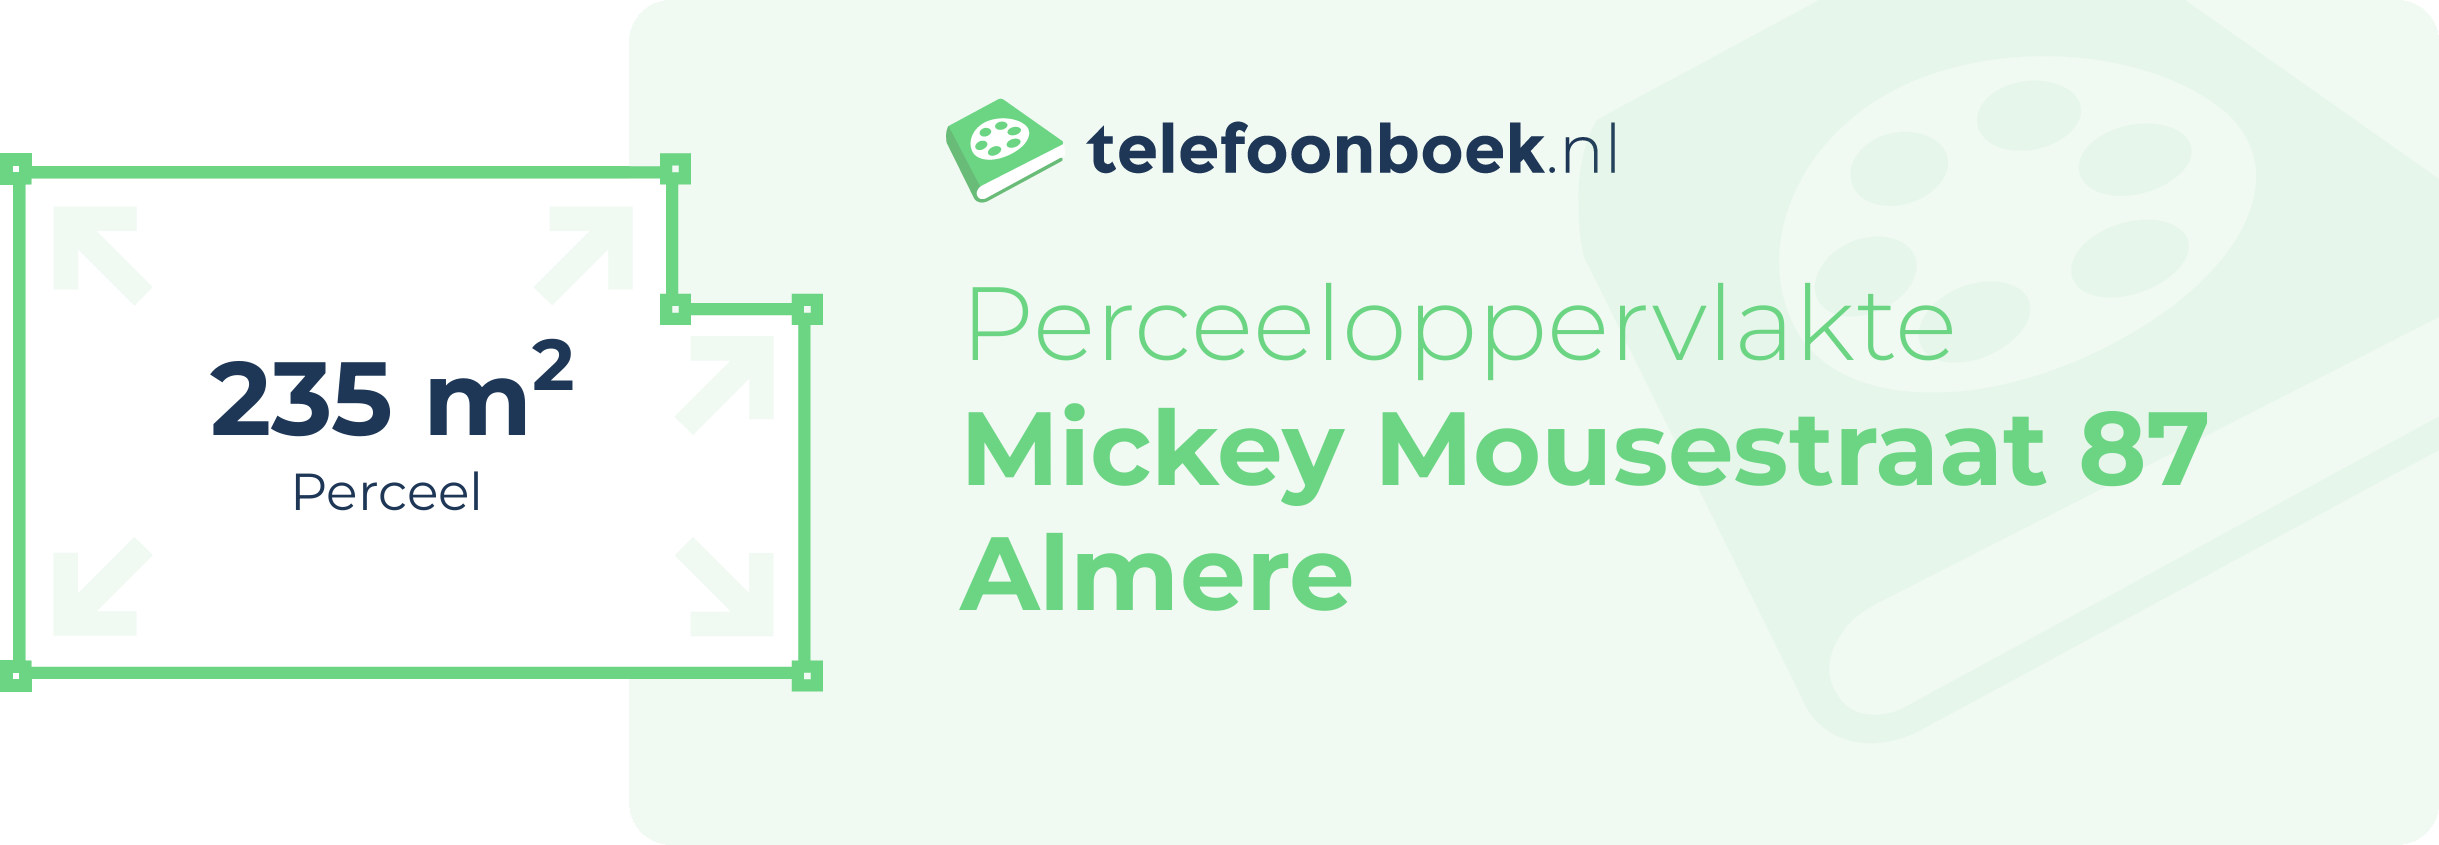 Perceeloppervlakte Mickey Mousestraat 87 Almere